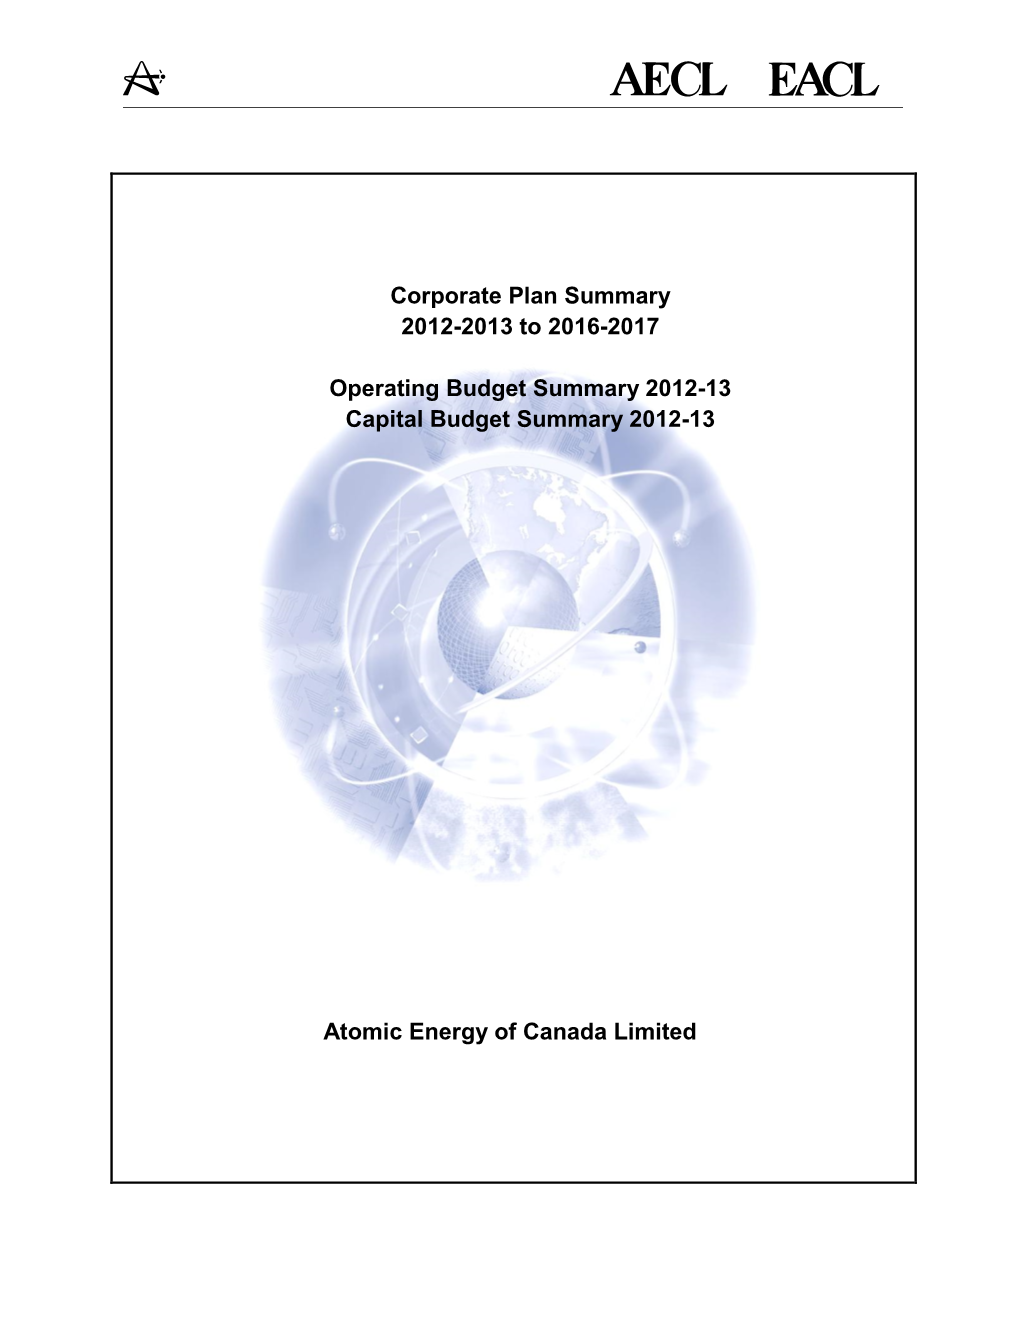 AECL Corporate Plan Summary 2012-13 (PDF)